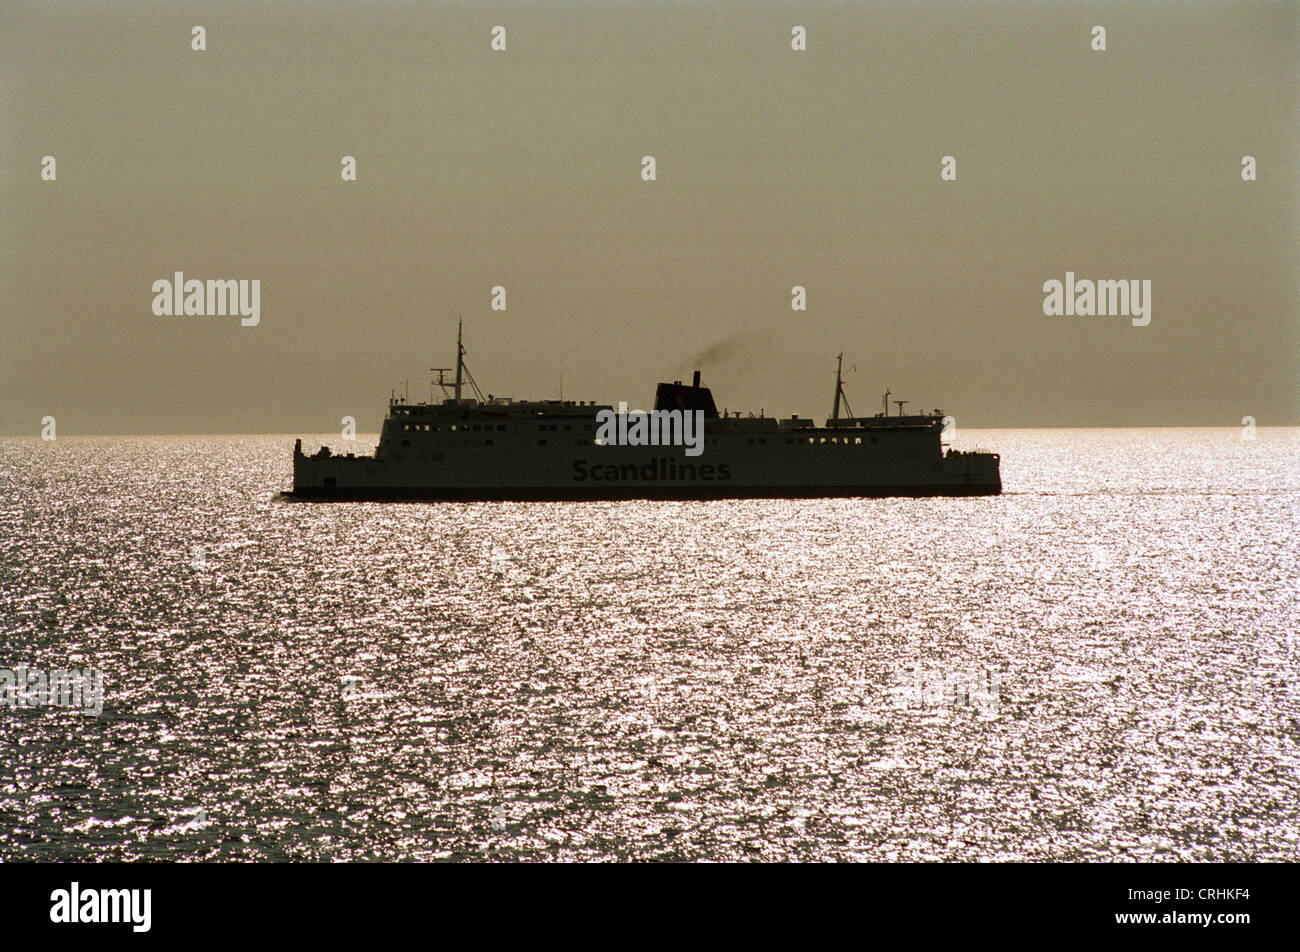 Gulf of Mecklenburg, Baltic Sea, Germany, Scandlines ferryboat Stock Photo